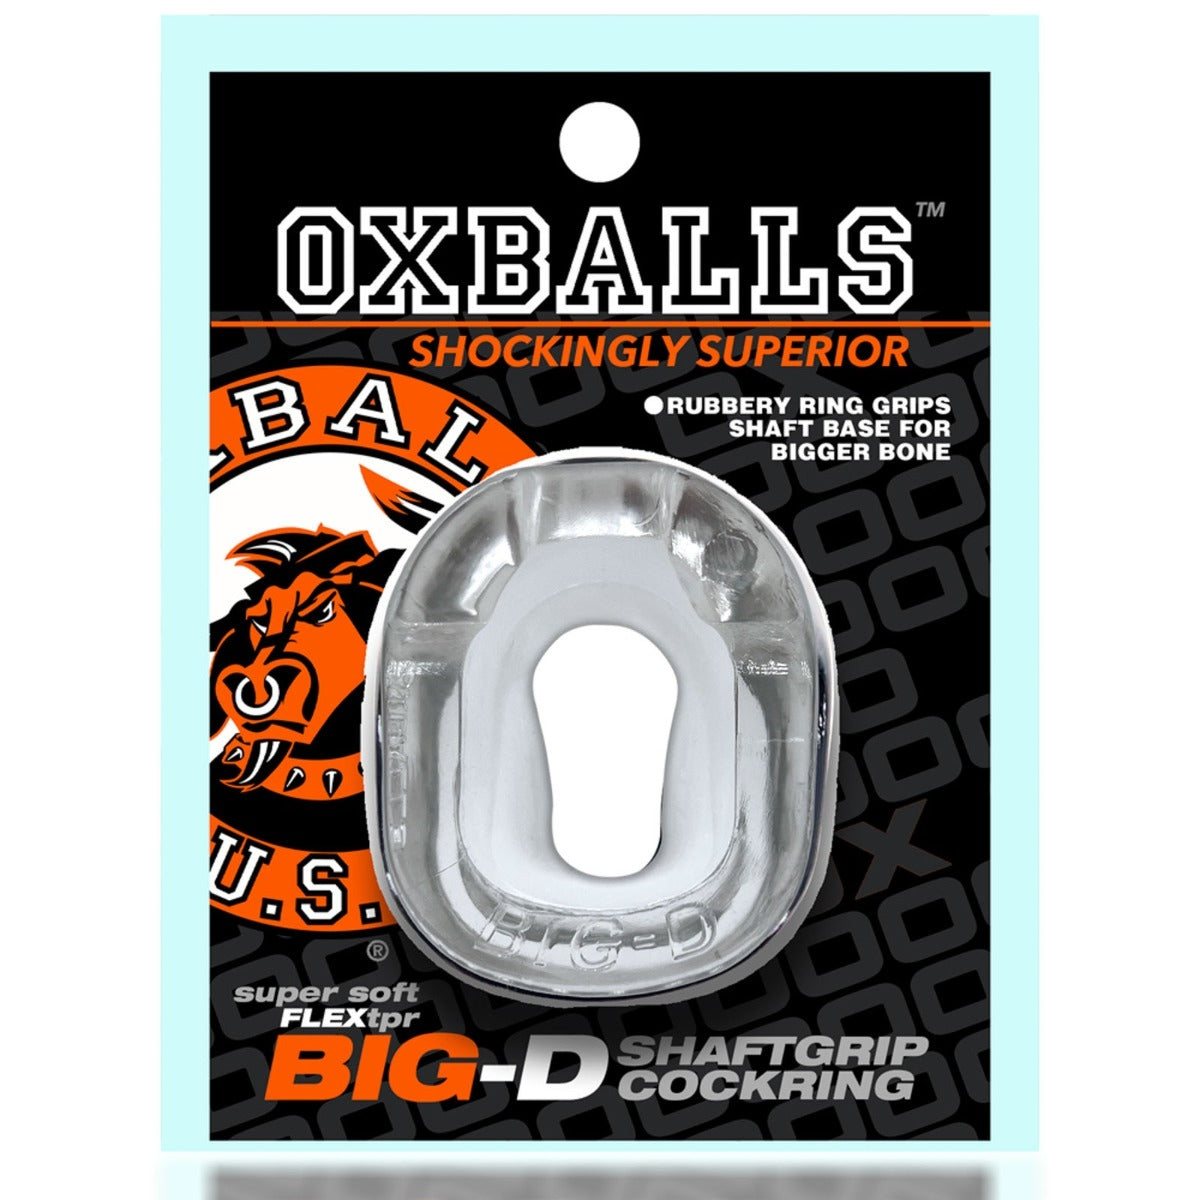 Oxballs Big D Shaft Grip Cock Ring Clear